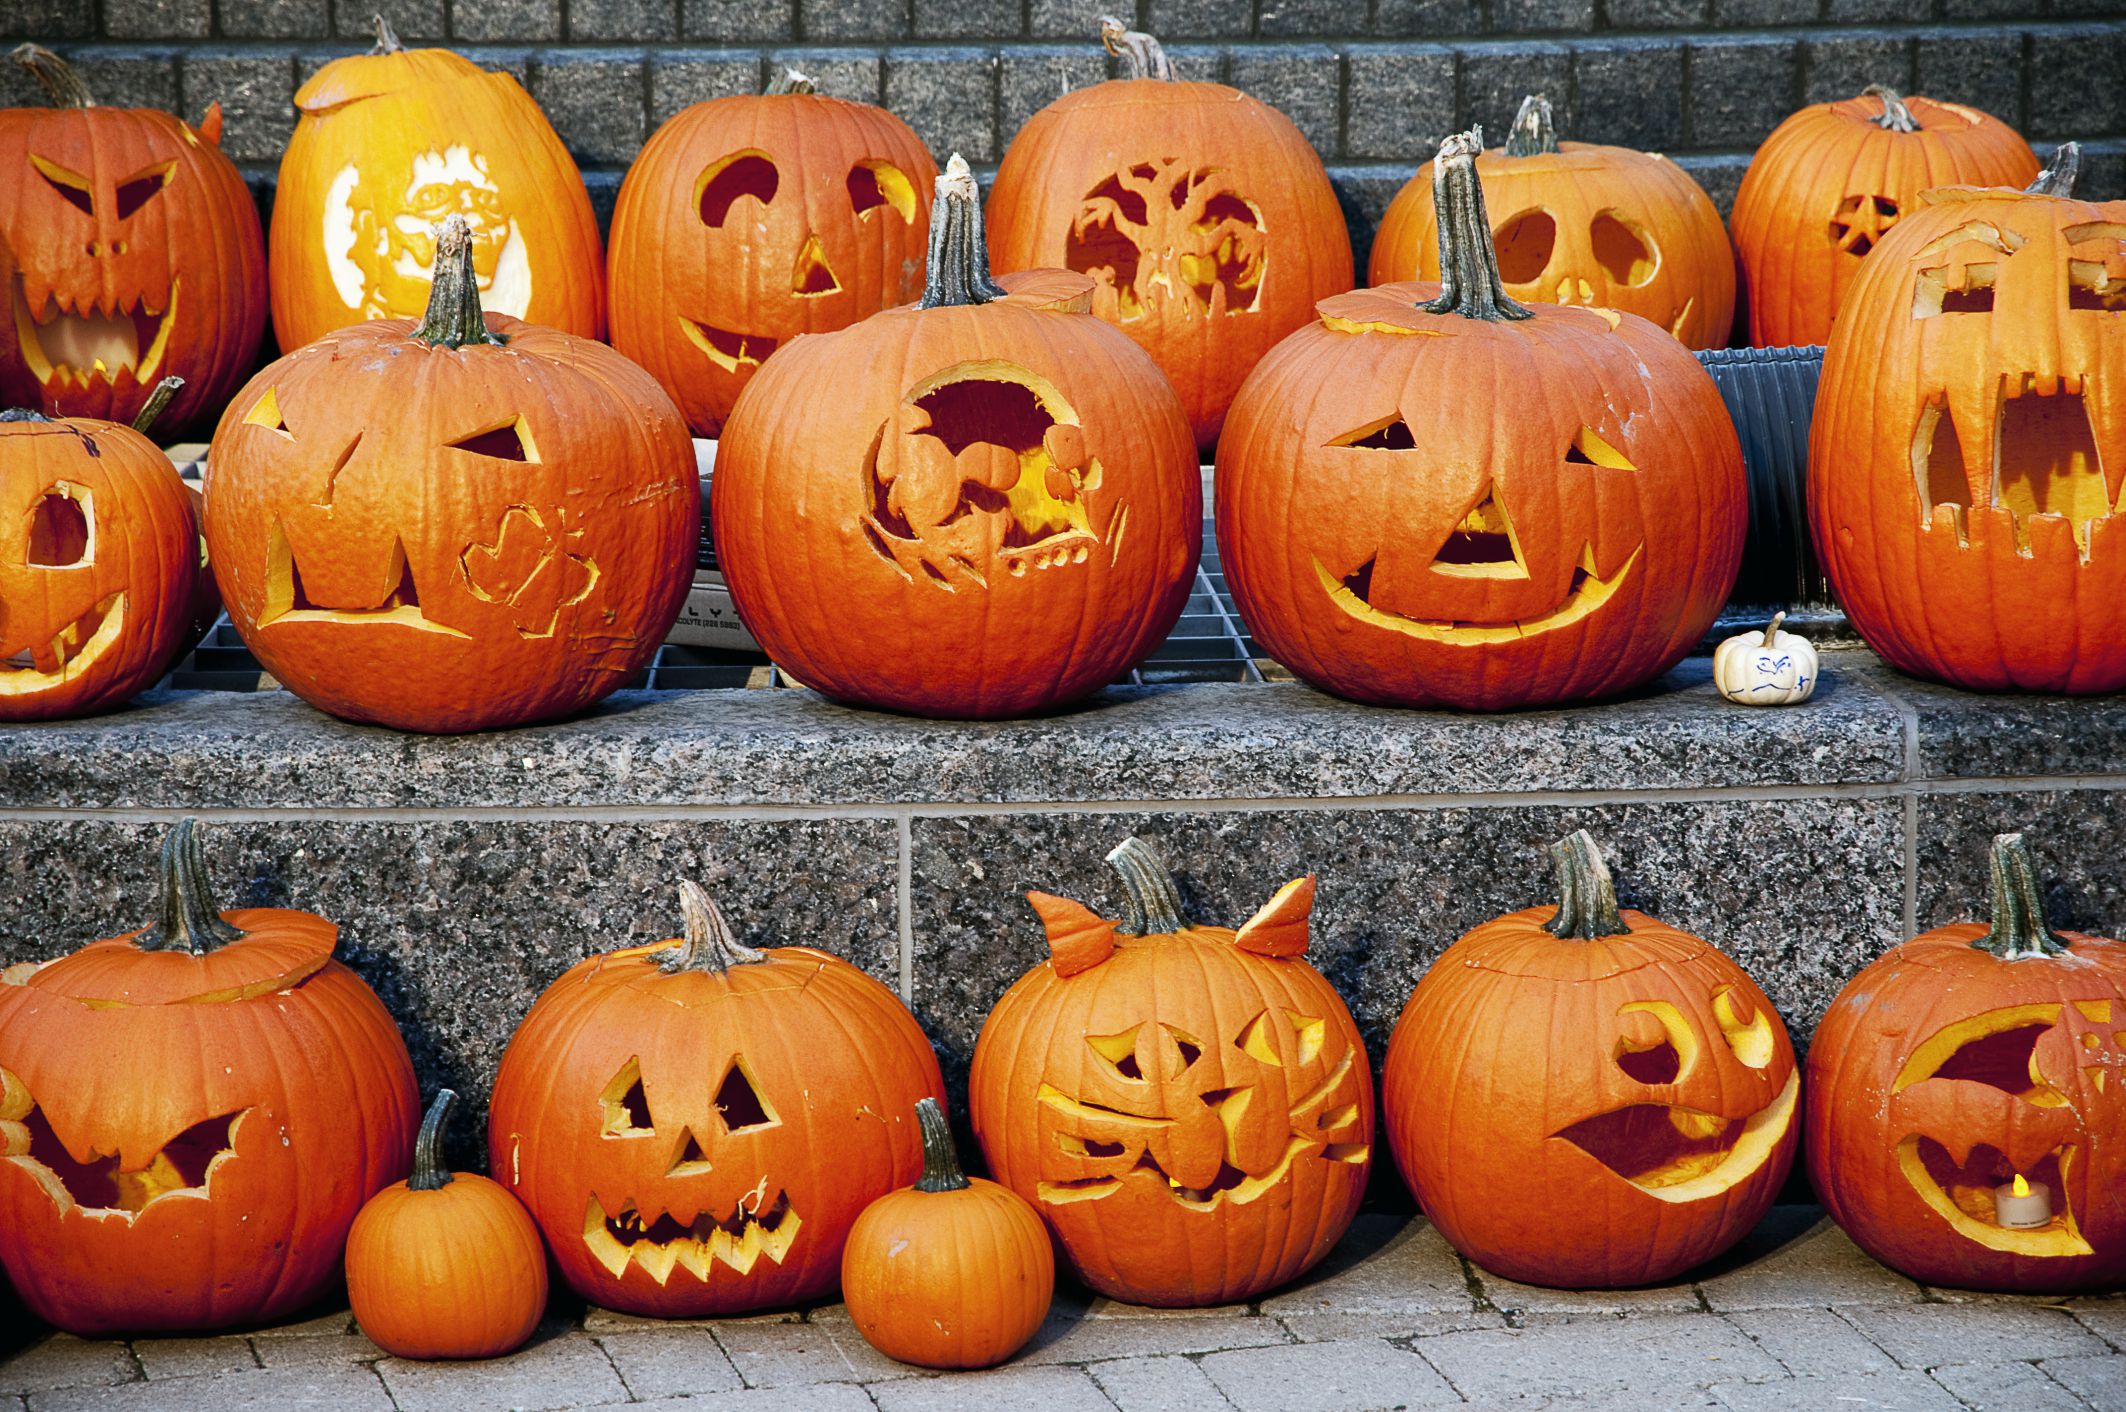 How To Preserve A Carved Halloween Jack o Lantern